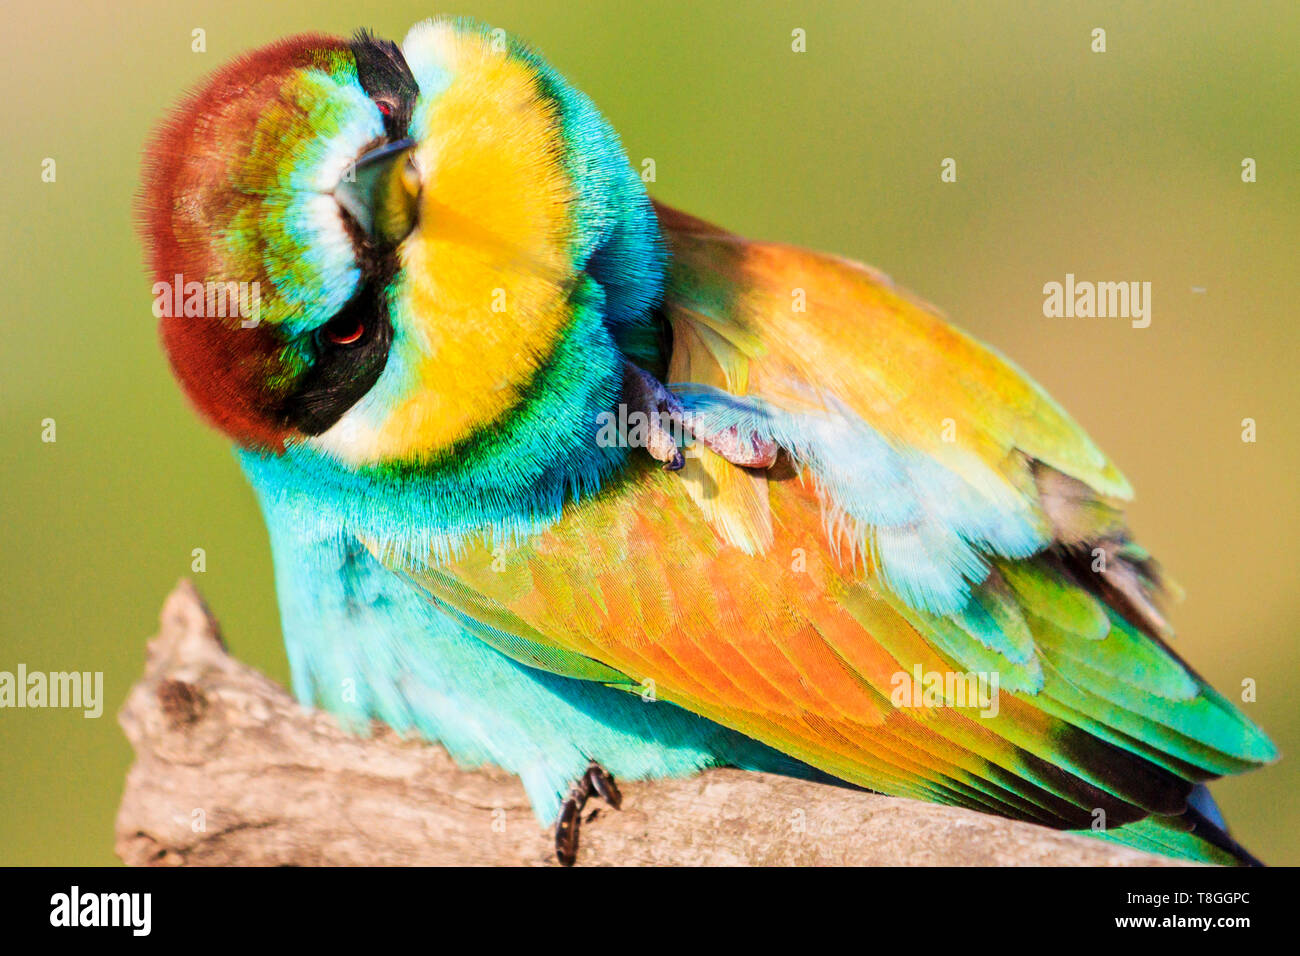 cute furry muzzle colorful birds Stock Photo